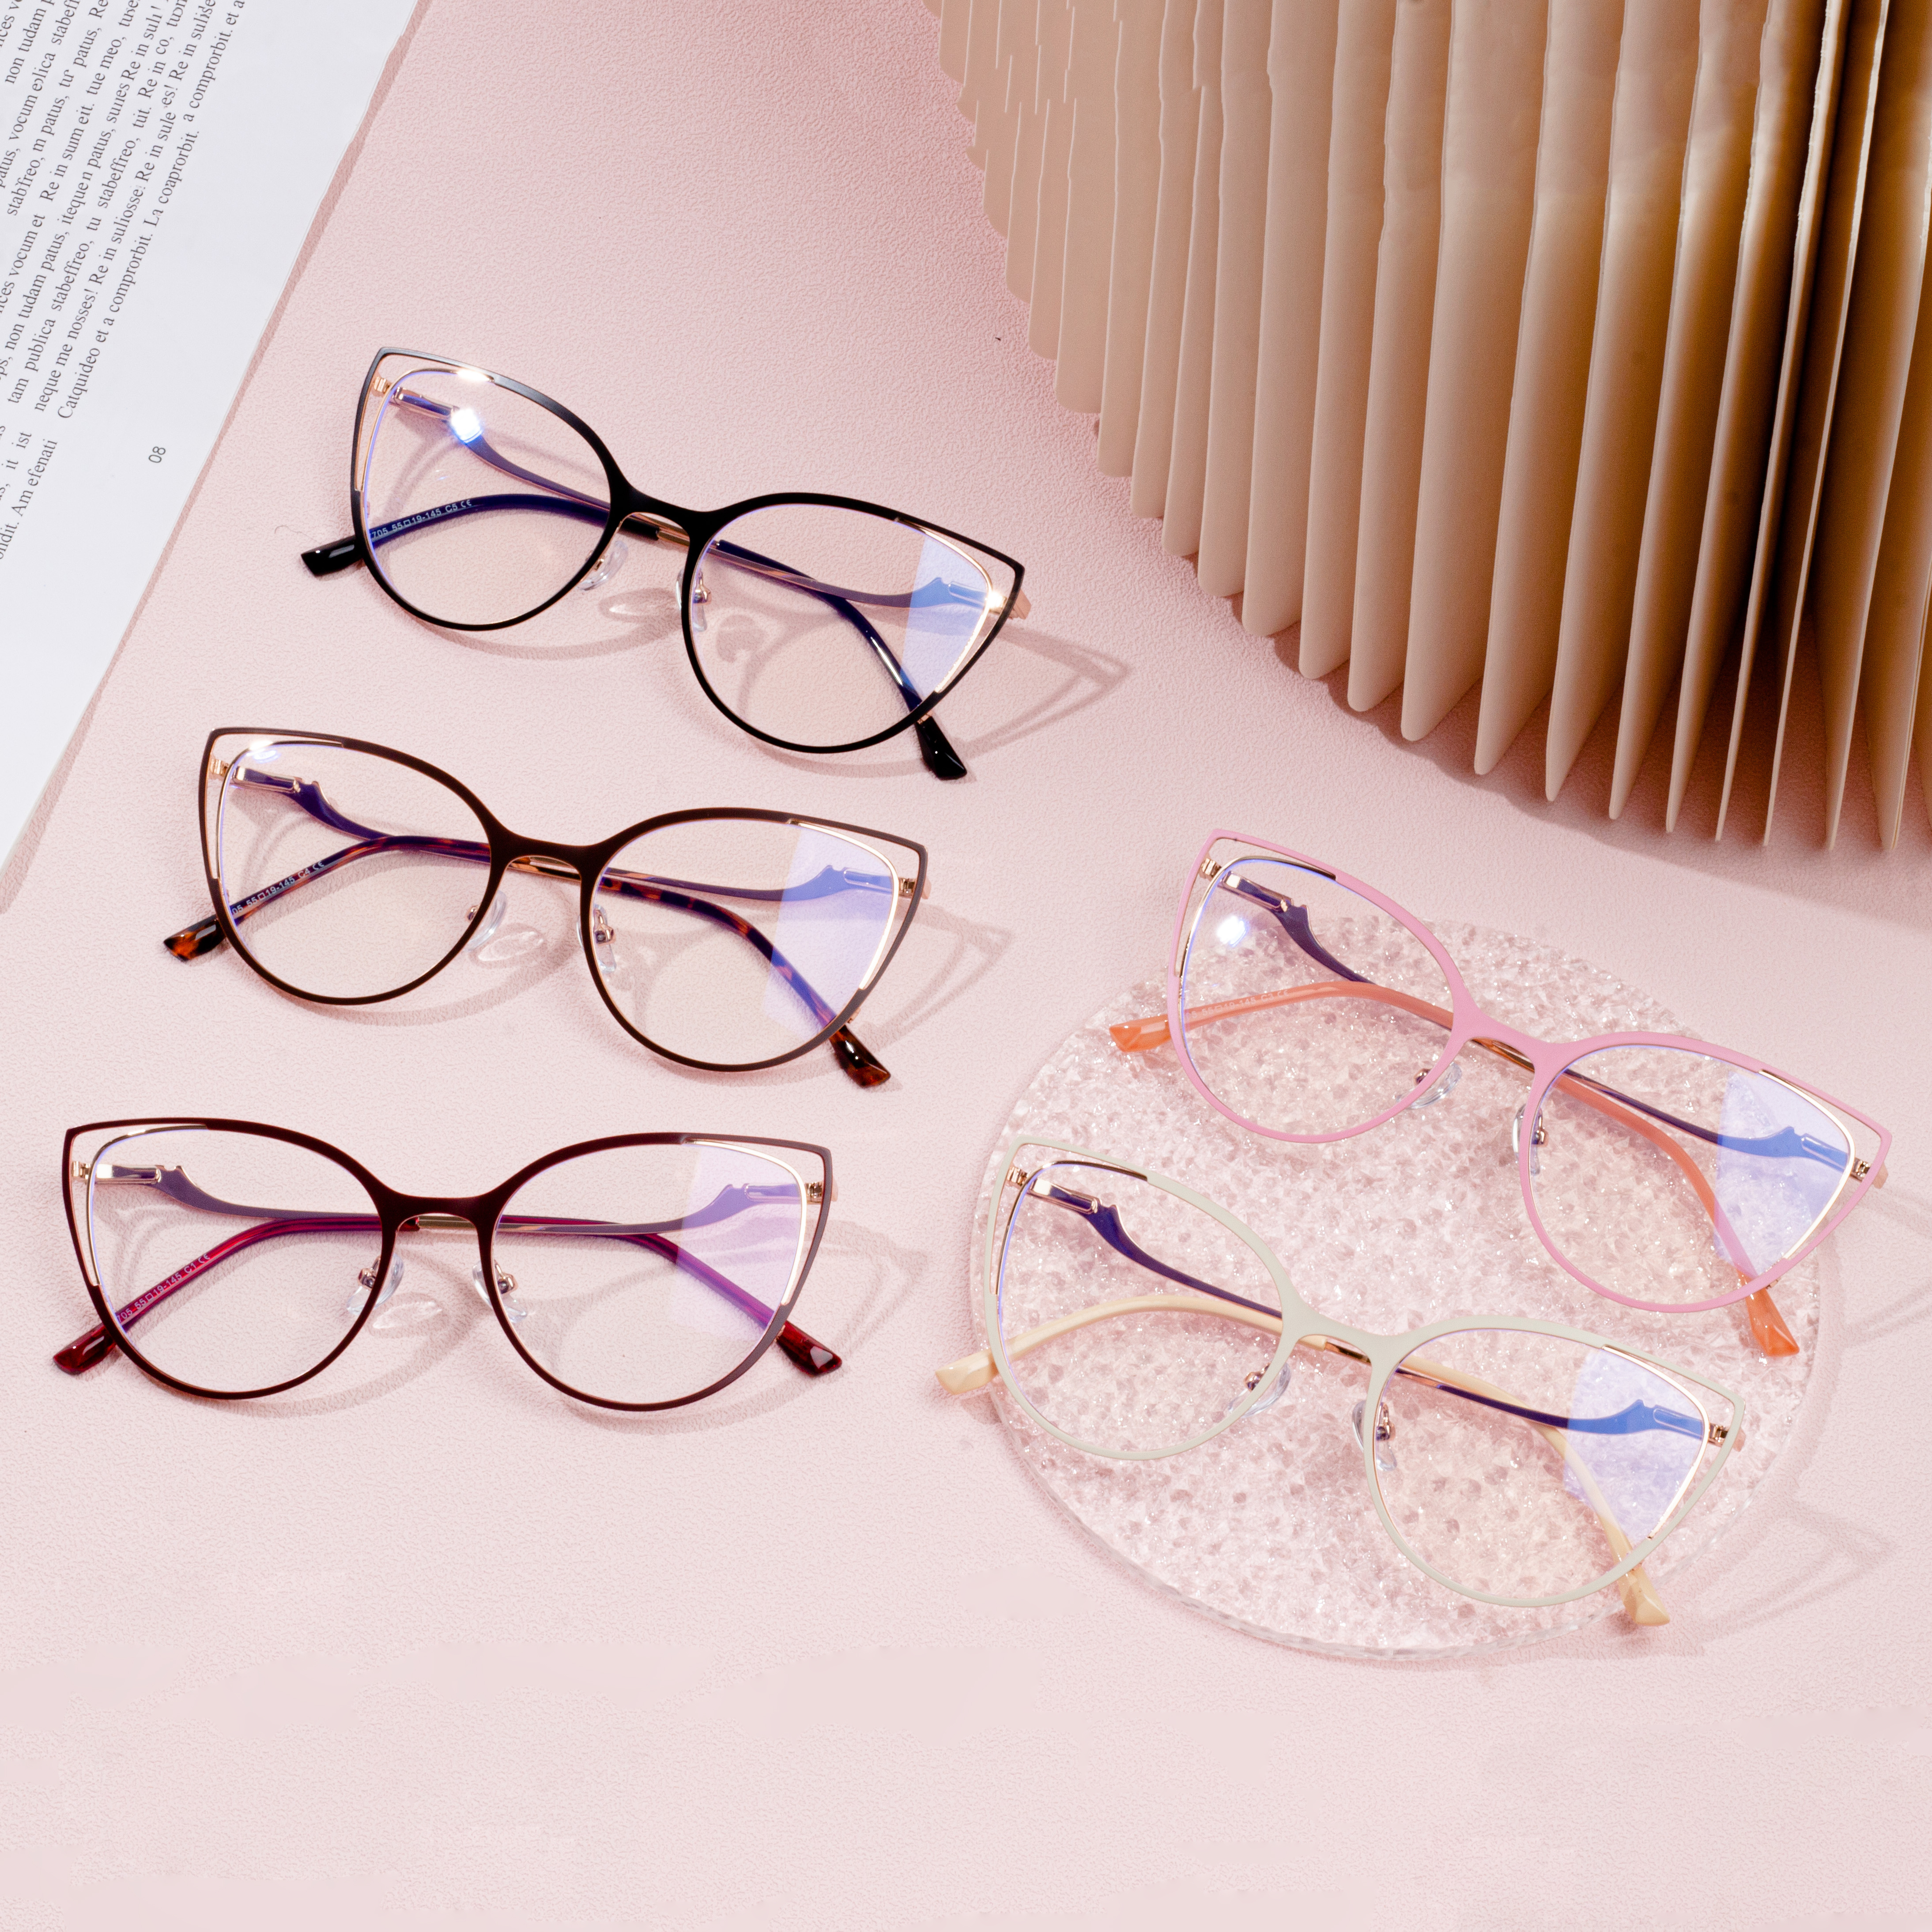 Metal Optical Eyeglasses Women Lightweight Spectacle